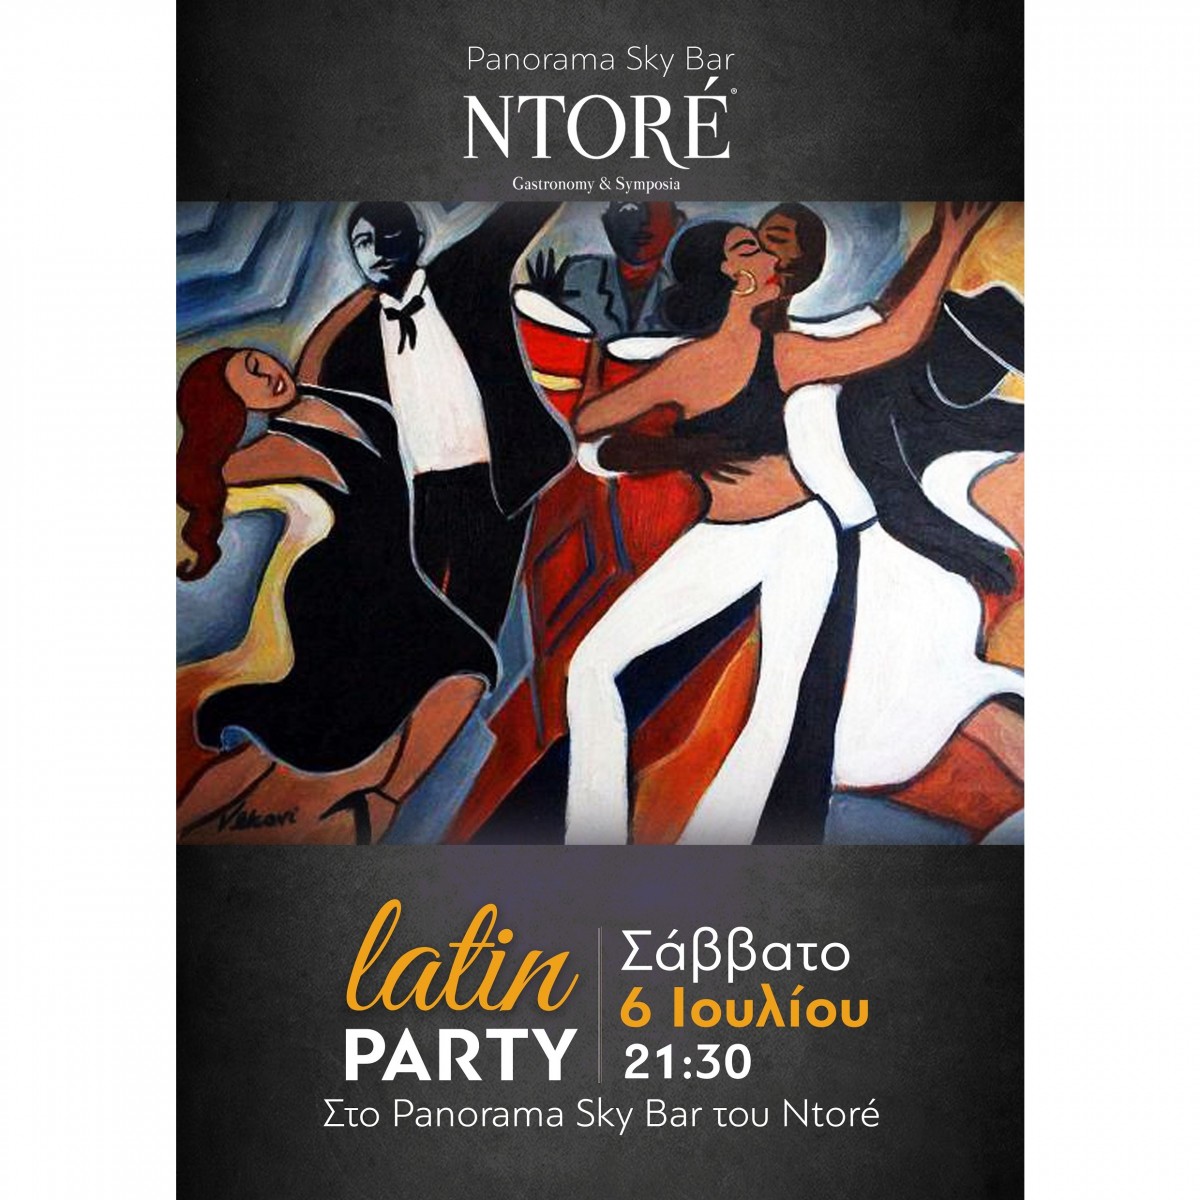 Latin Party στo Panorama Sky Bar του Ntoré, Σάββατο 1 Ιουλίου, 21:30